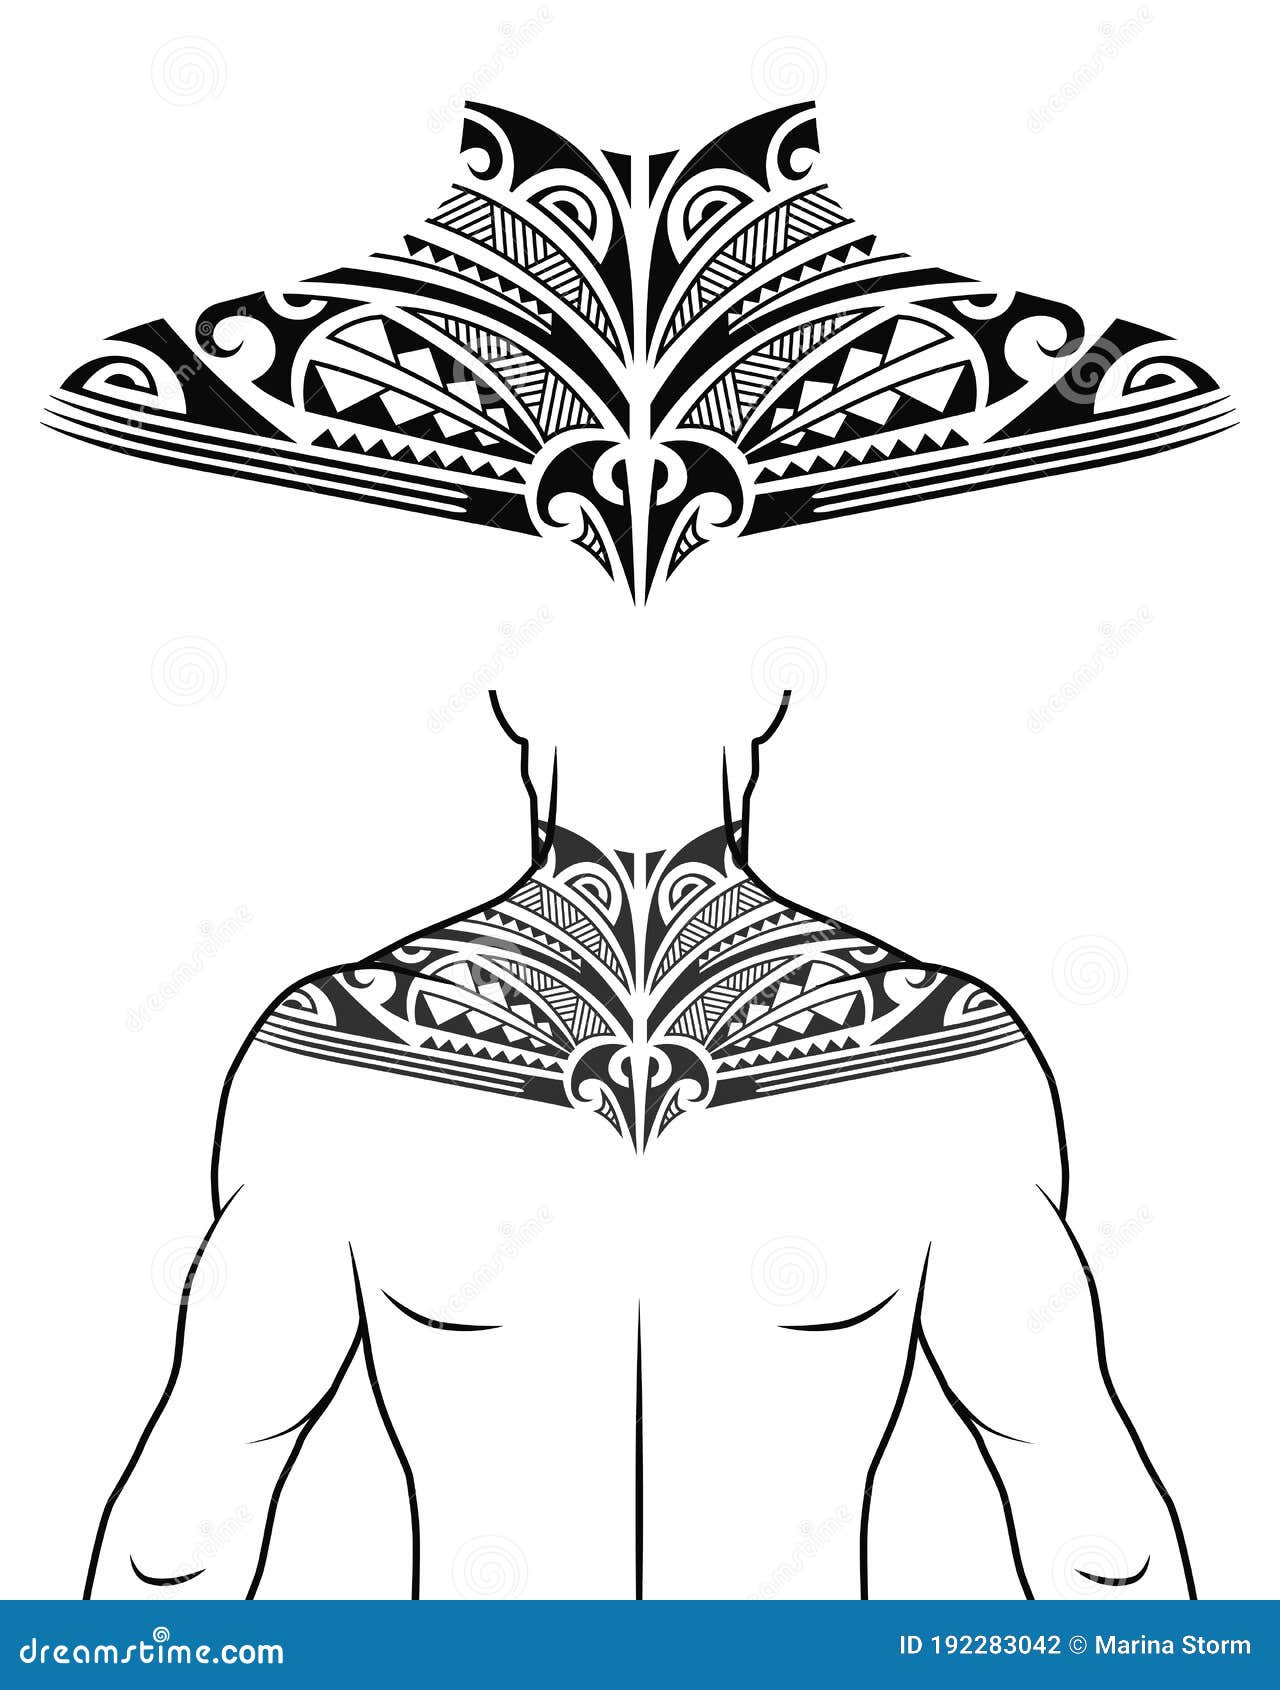 Tattoo uploaded by Tattoodo  Tribal ear tattoo by Jordan Souza  JordanSouza Haida Polynesian Maori Maoritattoos tamoko  marquesantattoo tribaltattooing blackwork tribal neotribal patterns  linework geometric ear neck behindtheear 